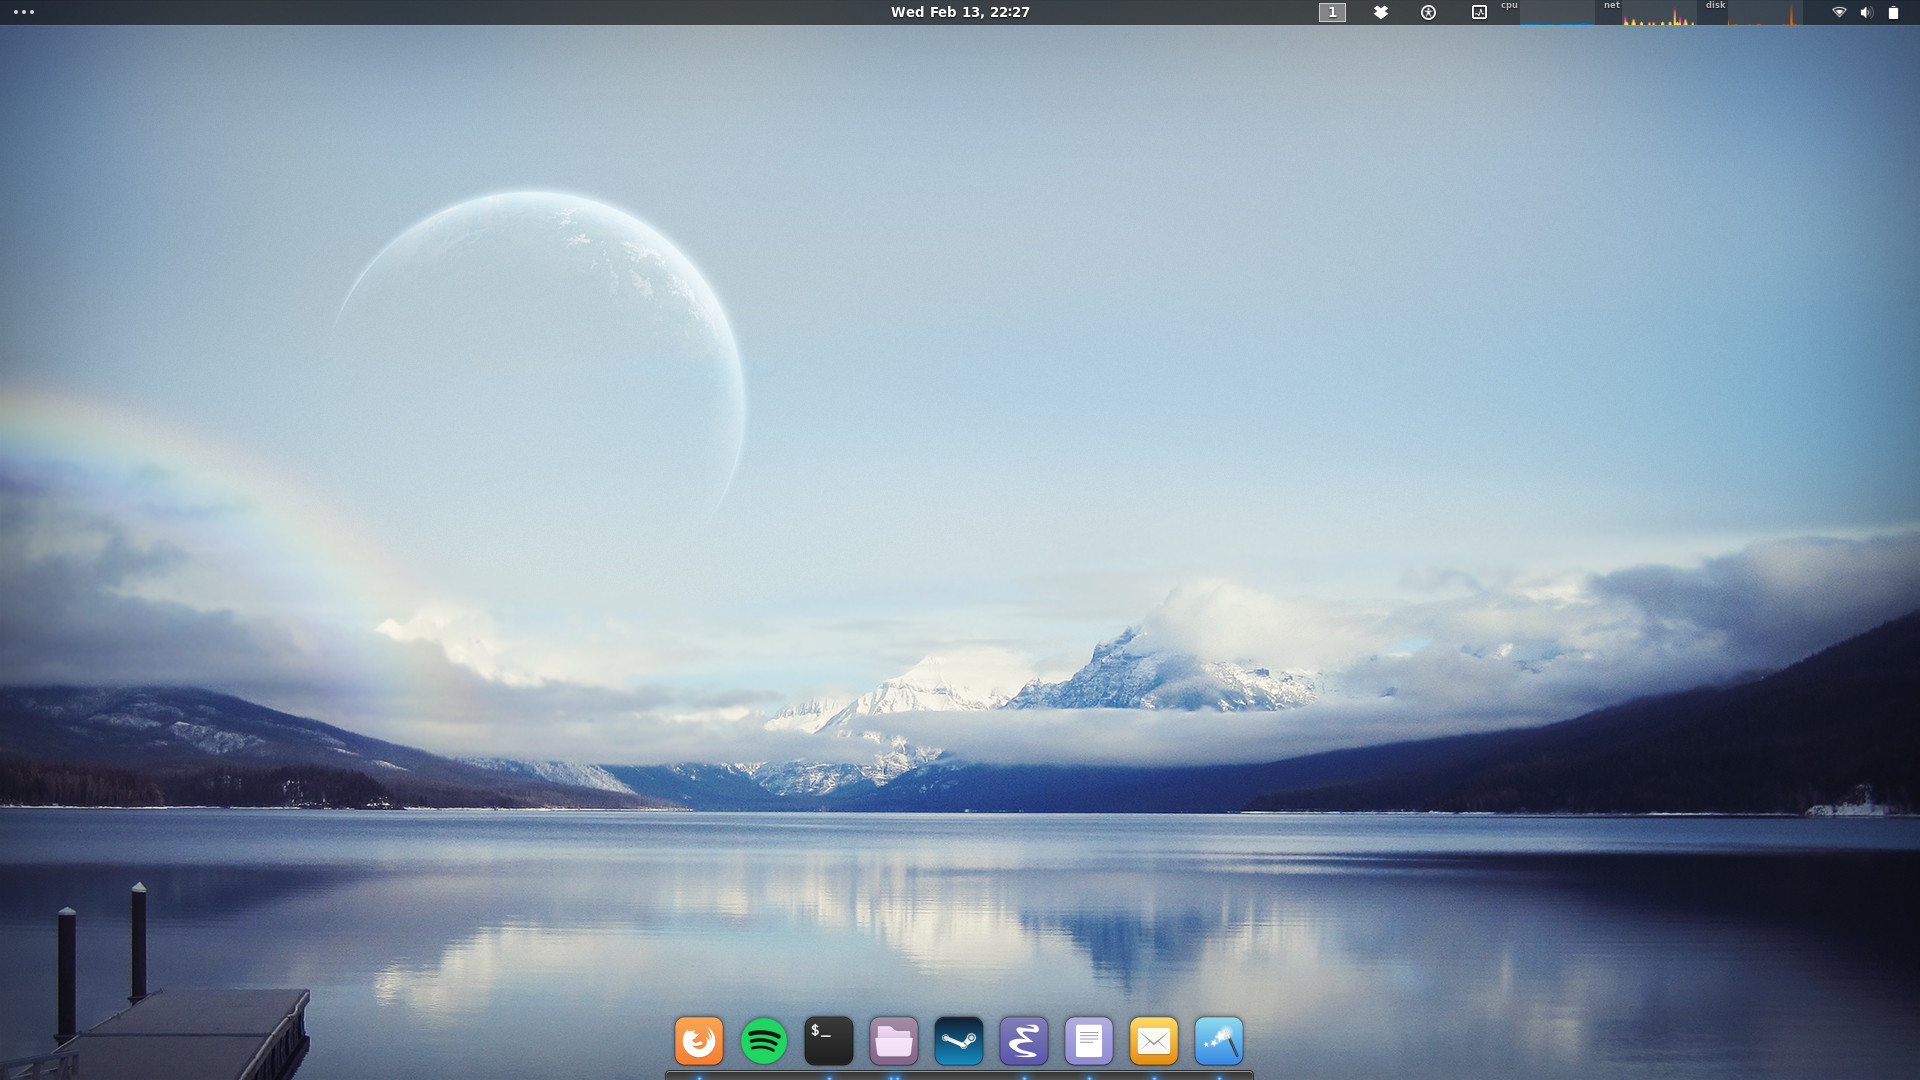 My Gnome Shell desktop Ubuntu 18.04